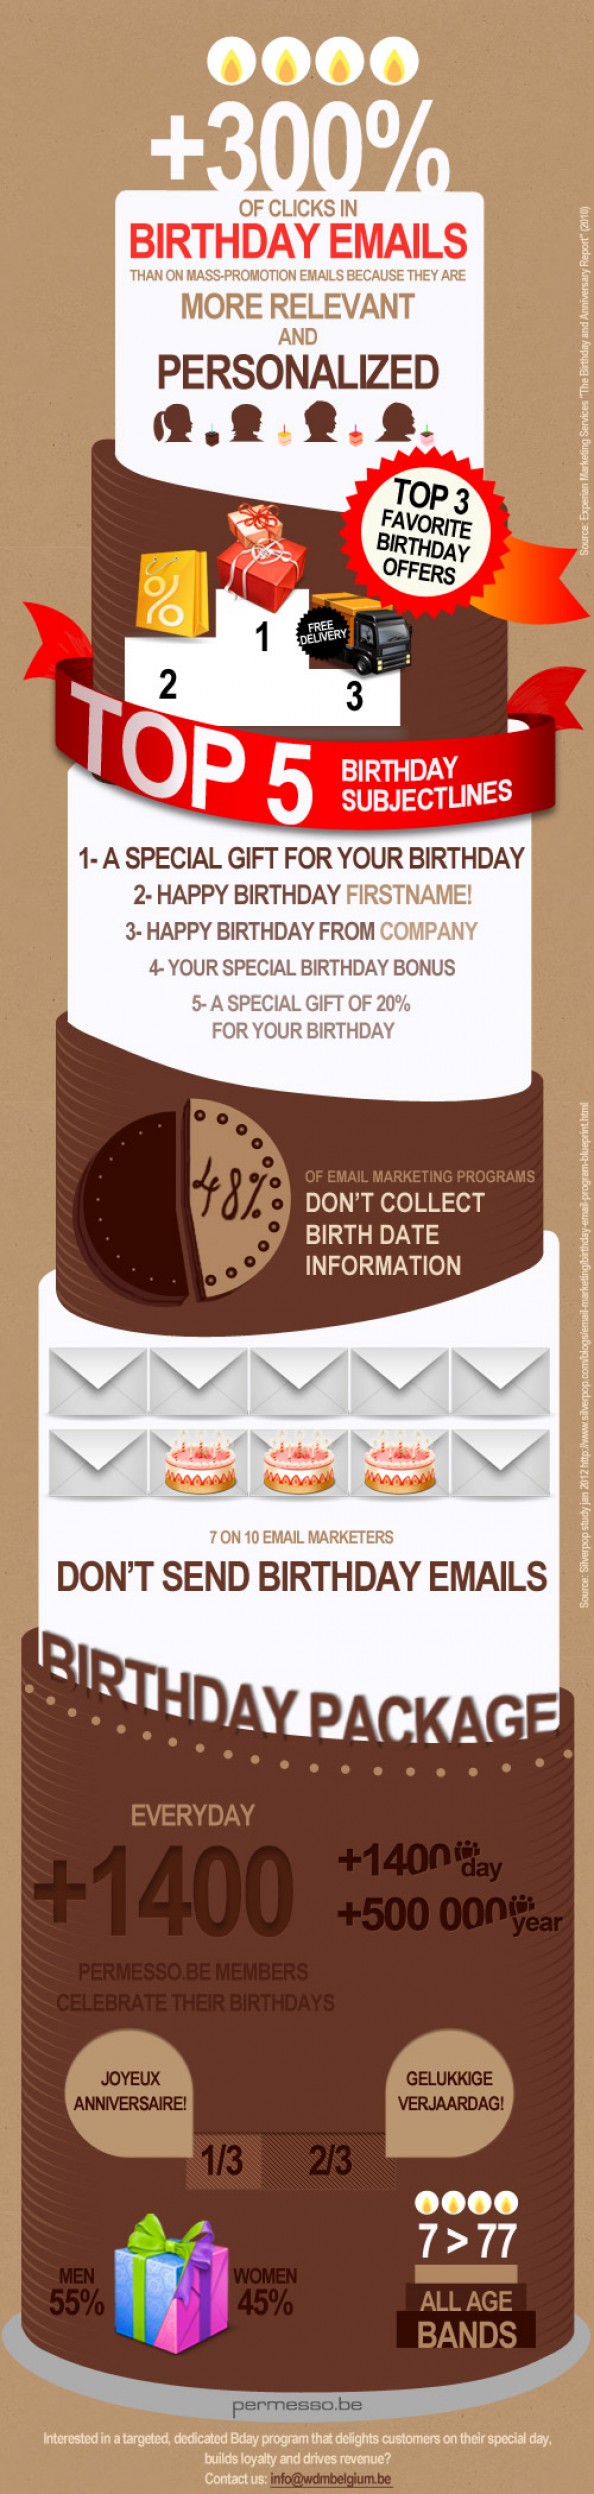 Happy Birthday Email Marketing Strategy